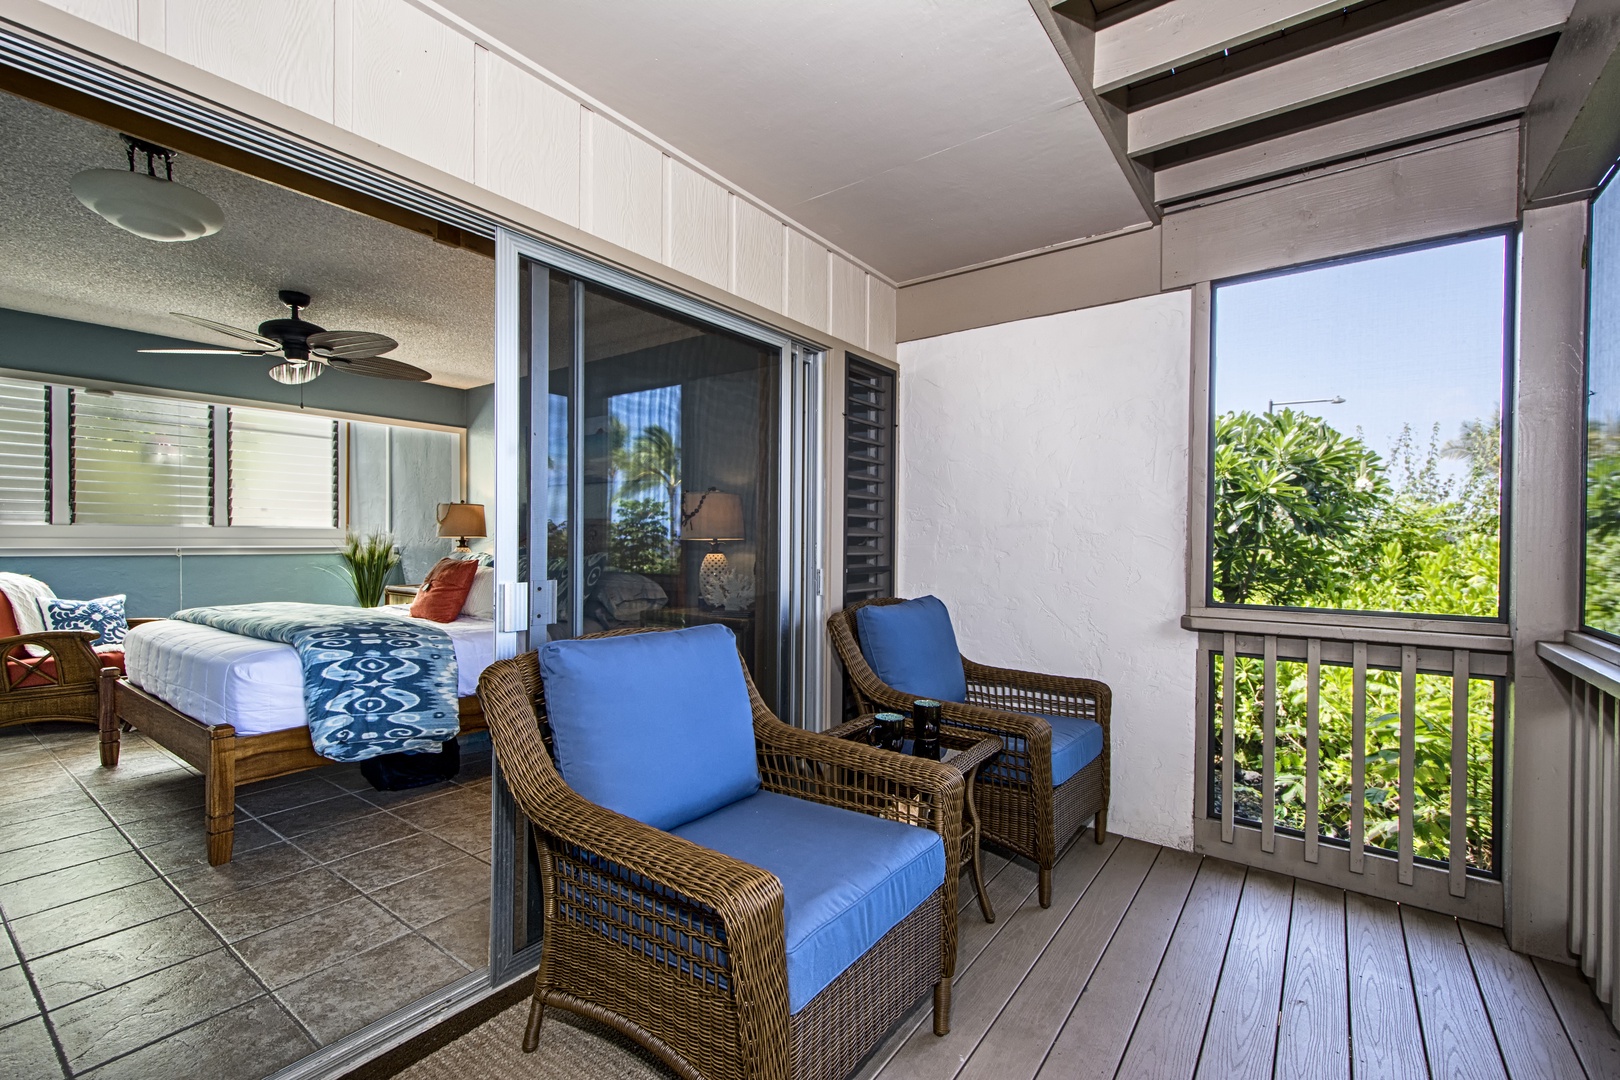 Kailua Kona Vacation Rentals, Keauhou Resort 104 - Downstairs bedroom Lanai!